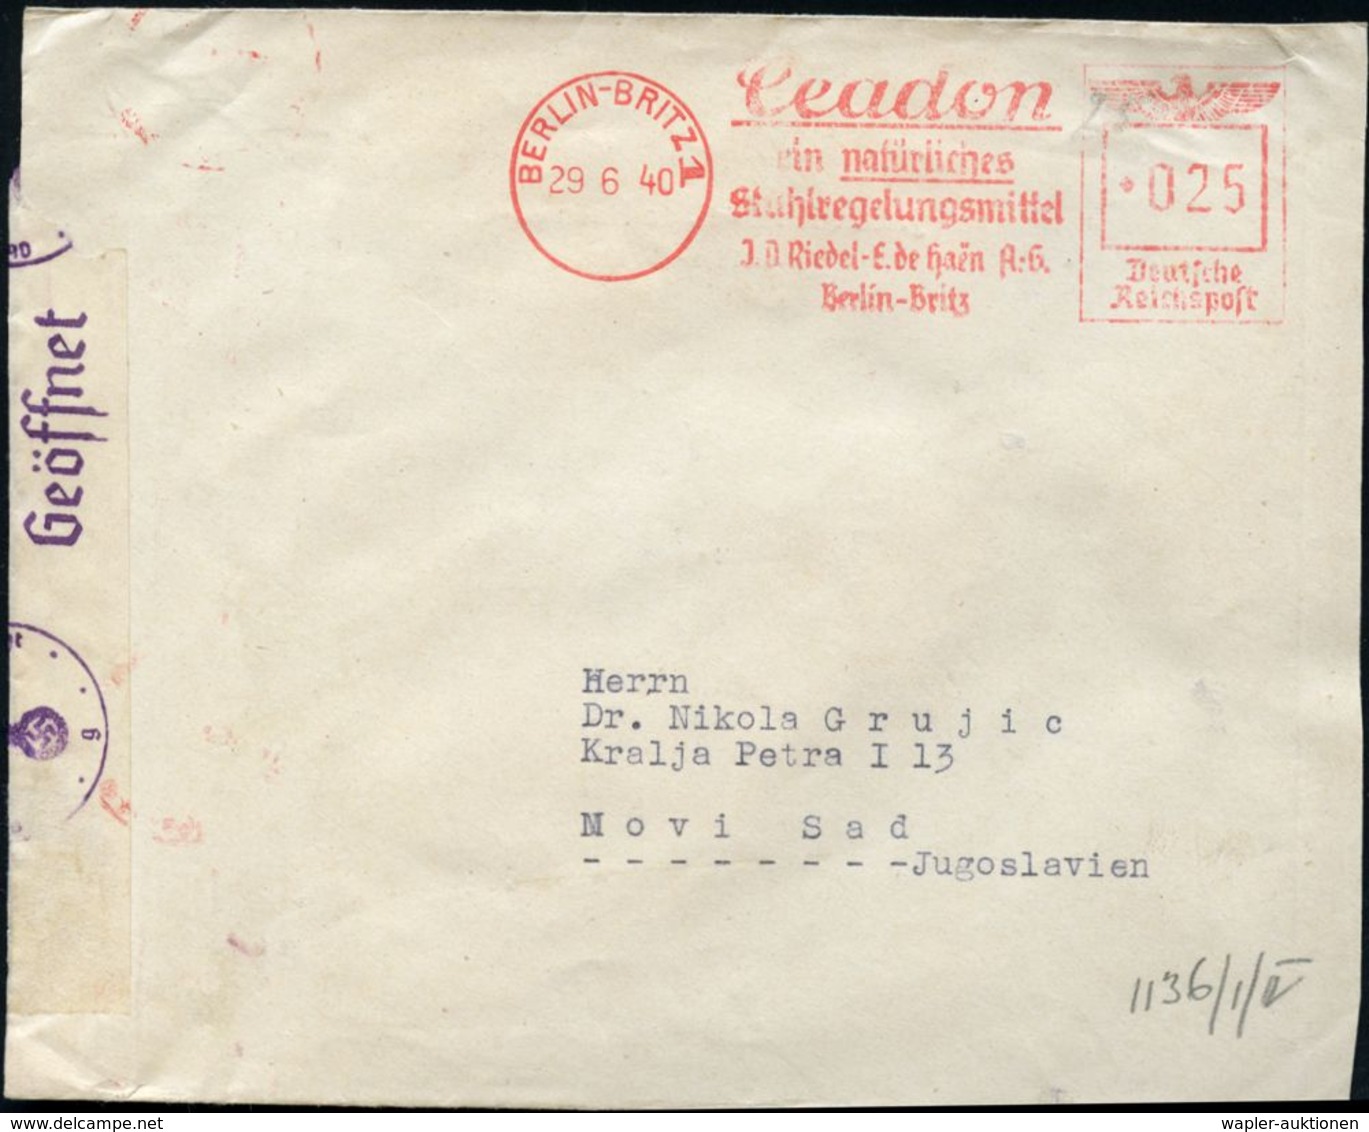 BERLIN-BRITZ 1/ Ceadon/ Ein Natürliches/ Stuhlregelungsmittel/ J.D.Riedel-E De Haen A.G. 1940 (29.6.) AFS 025 Pf. + OKW- - Chimica